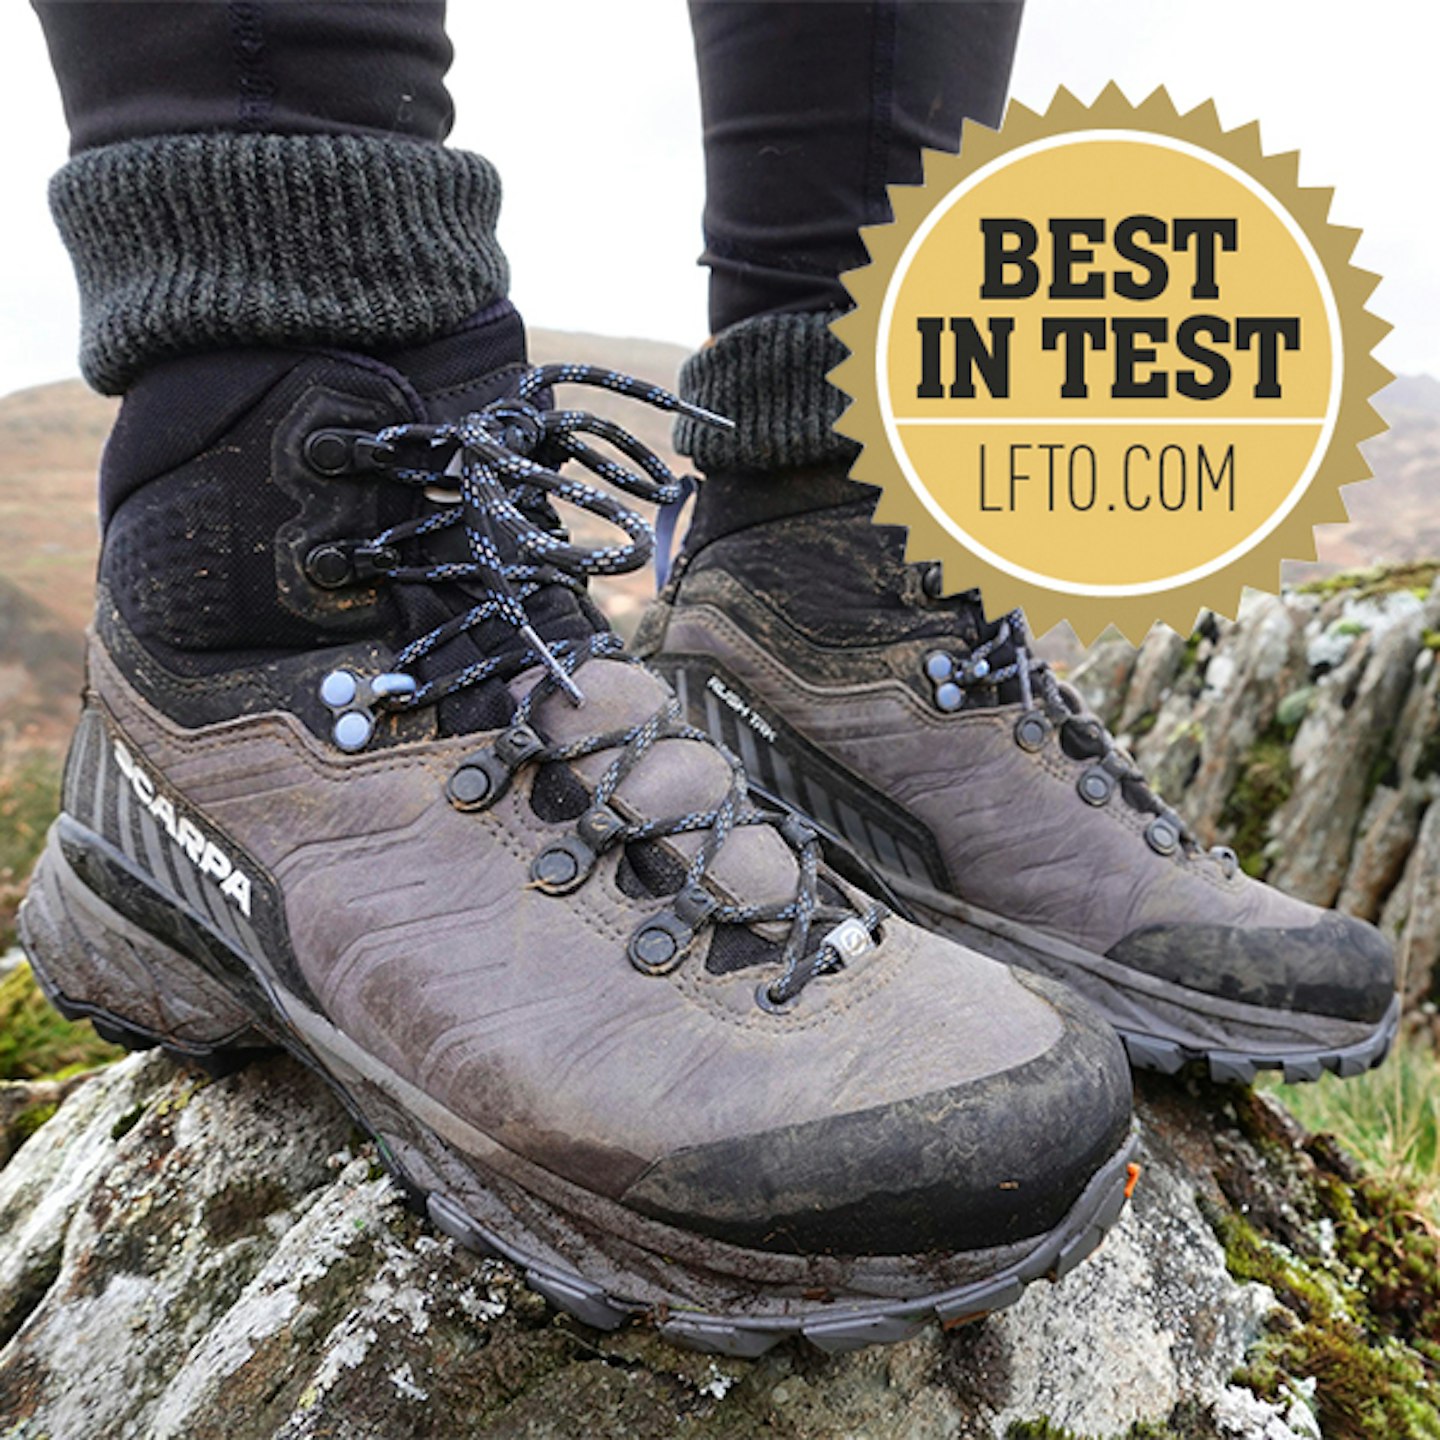 Scarpa Rush Trk Pro GTX best hiking boot 3-season reviewed tested